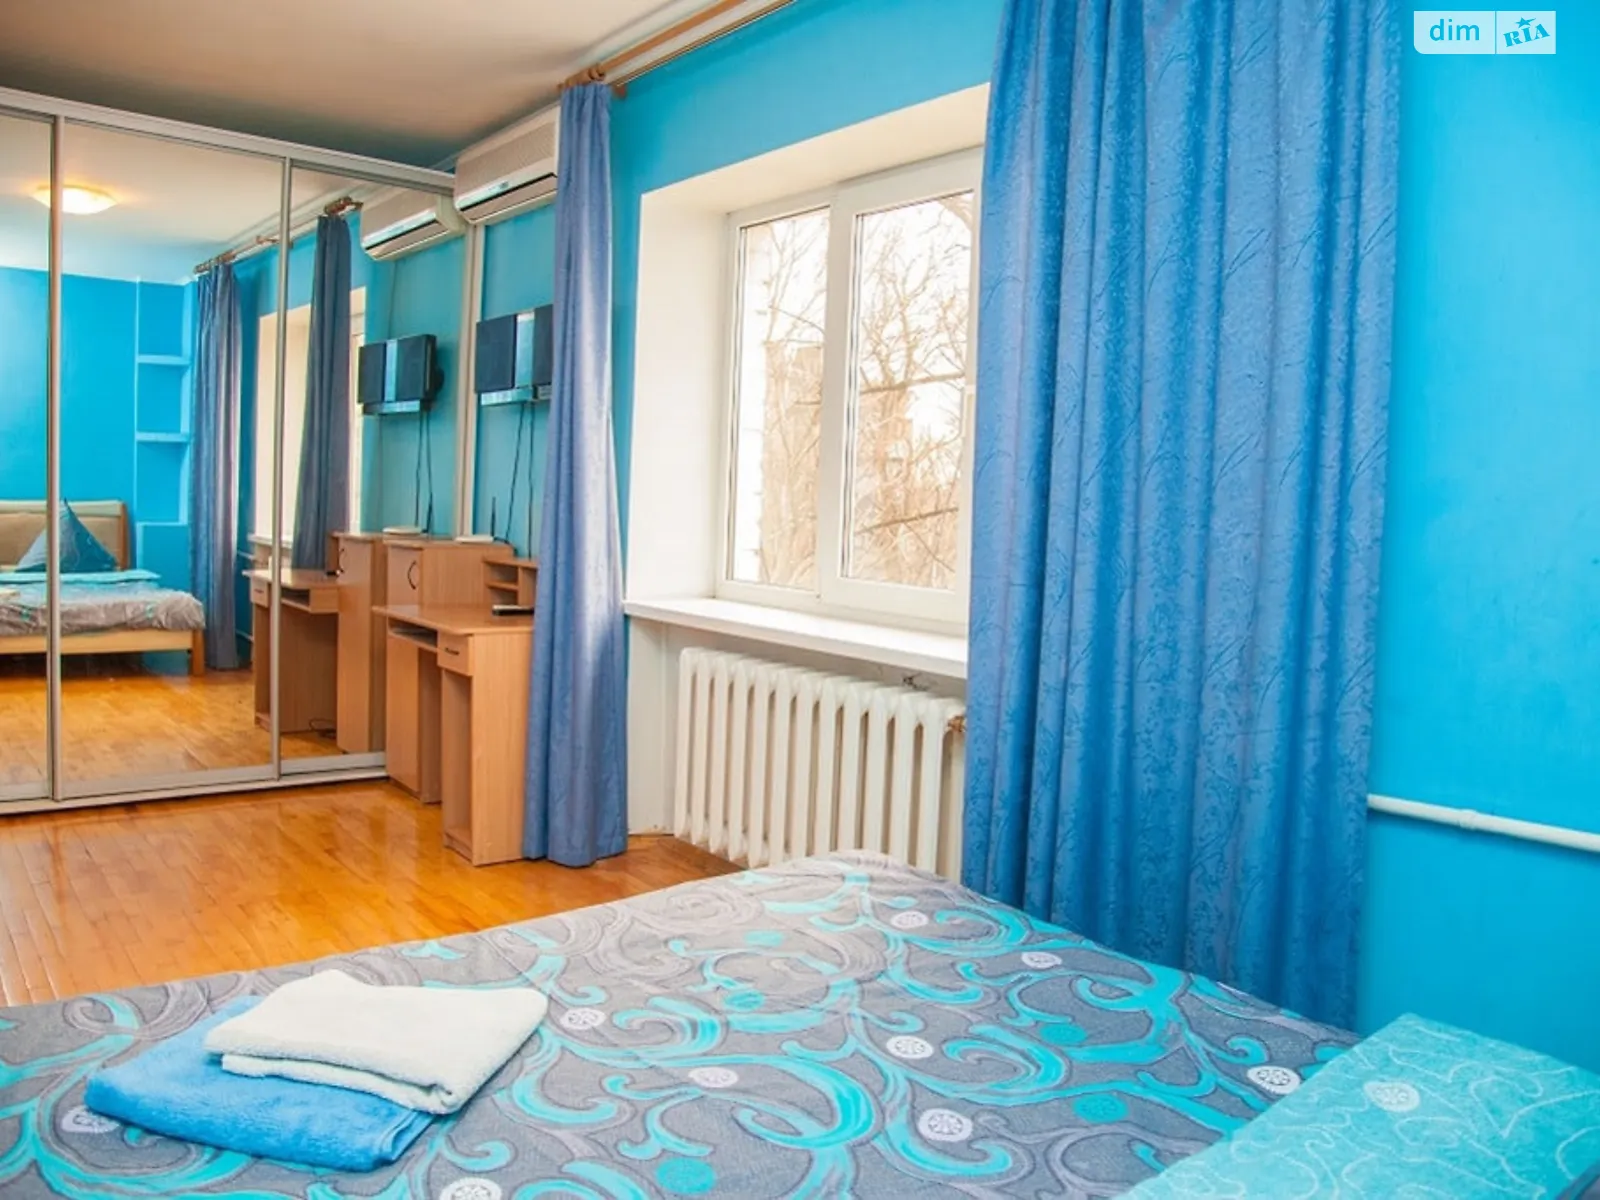 2-кімнатна квартира у Запоріжжі, цена: 850 грн